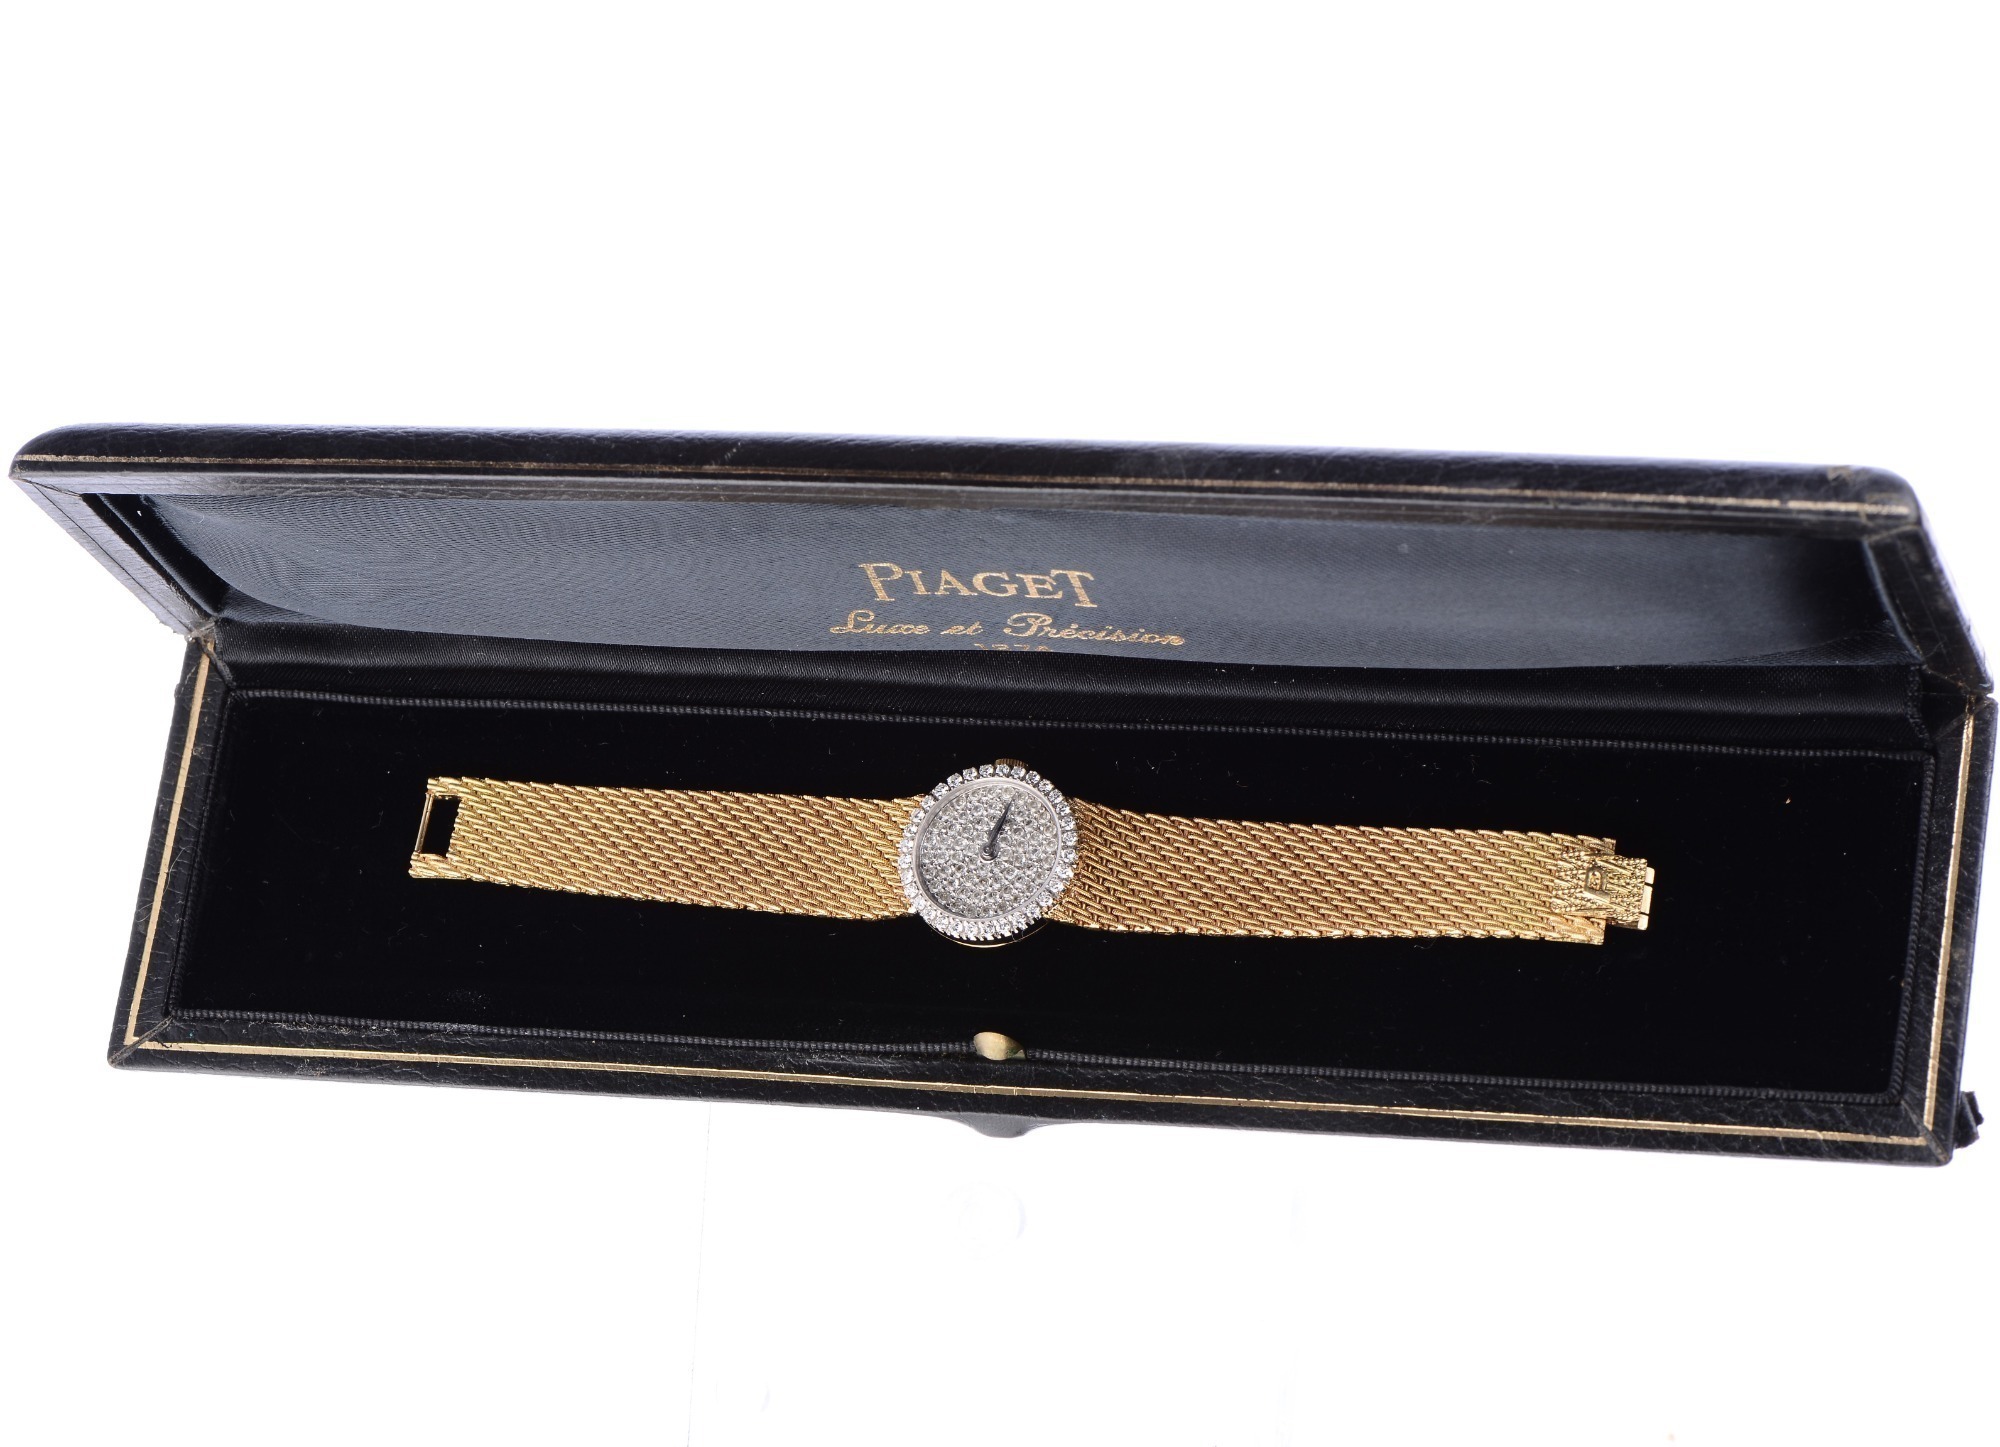 Piaget Pave Diamond Dial 18K Gold Wristwatch With Diamond Bezel In Original Box